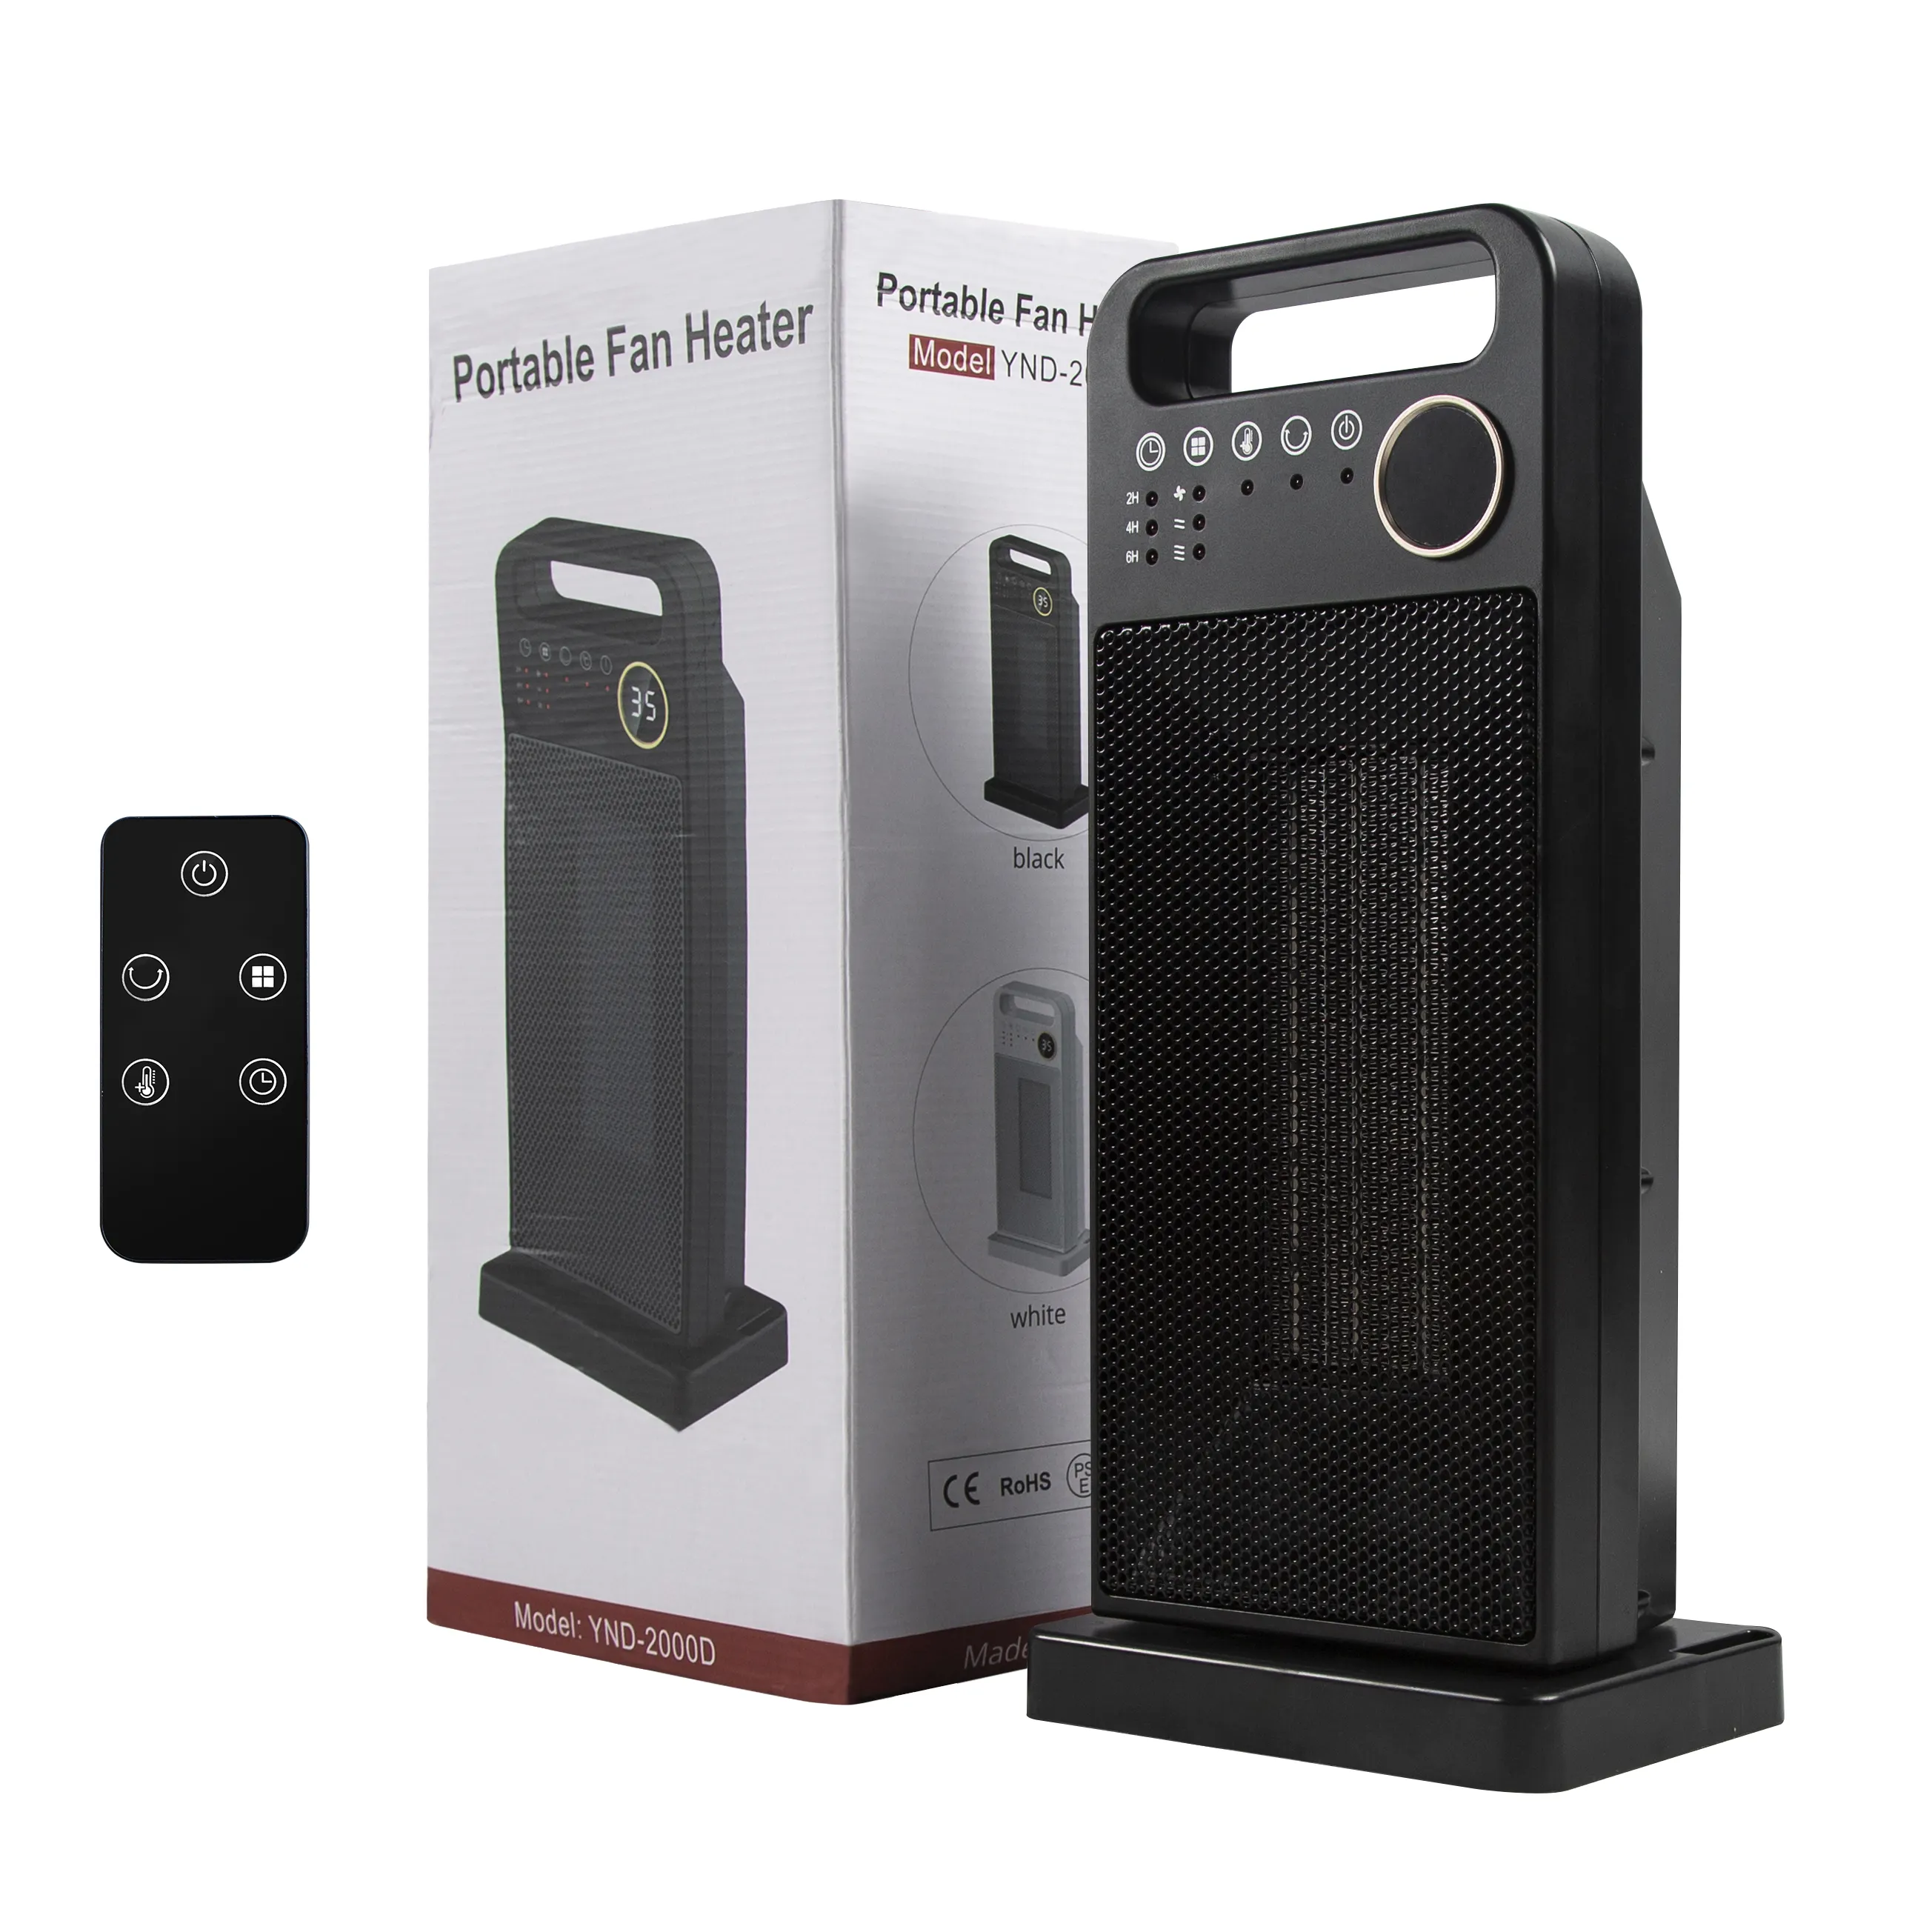 Mini riscaldatore elettrico portatile ad aria domestica Mini riscaldatore portatile ventilatore riscaldatore usb remoto